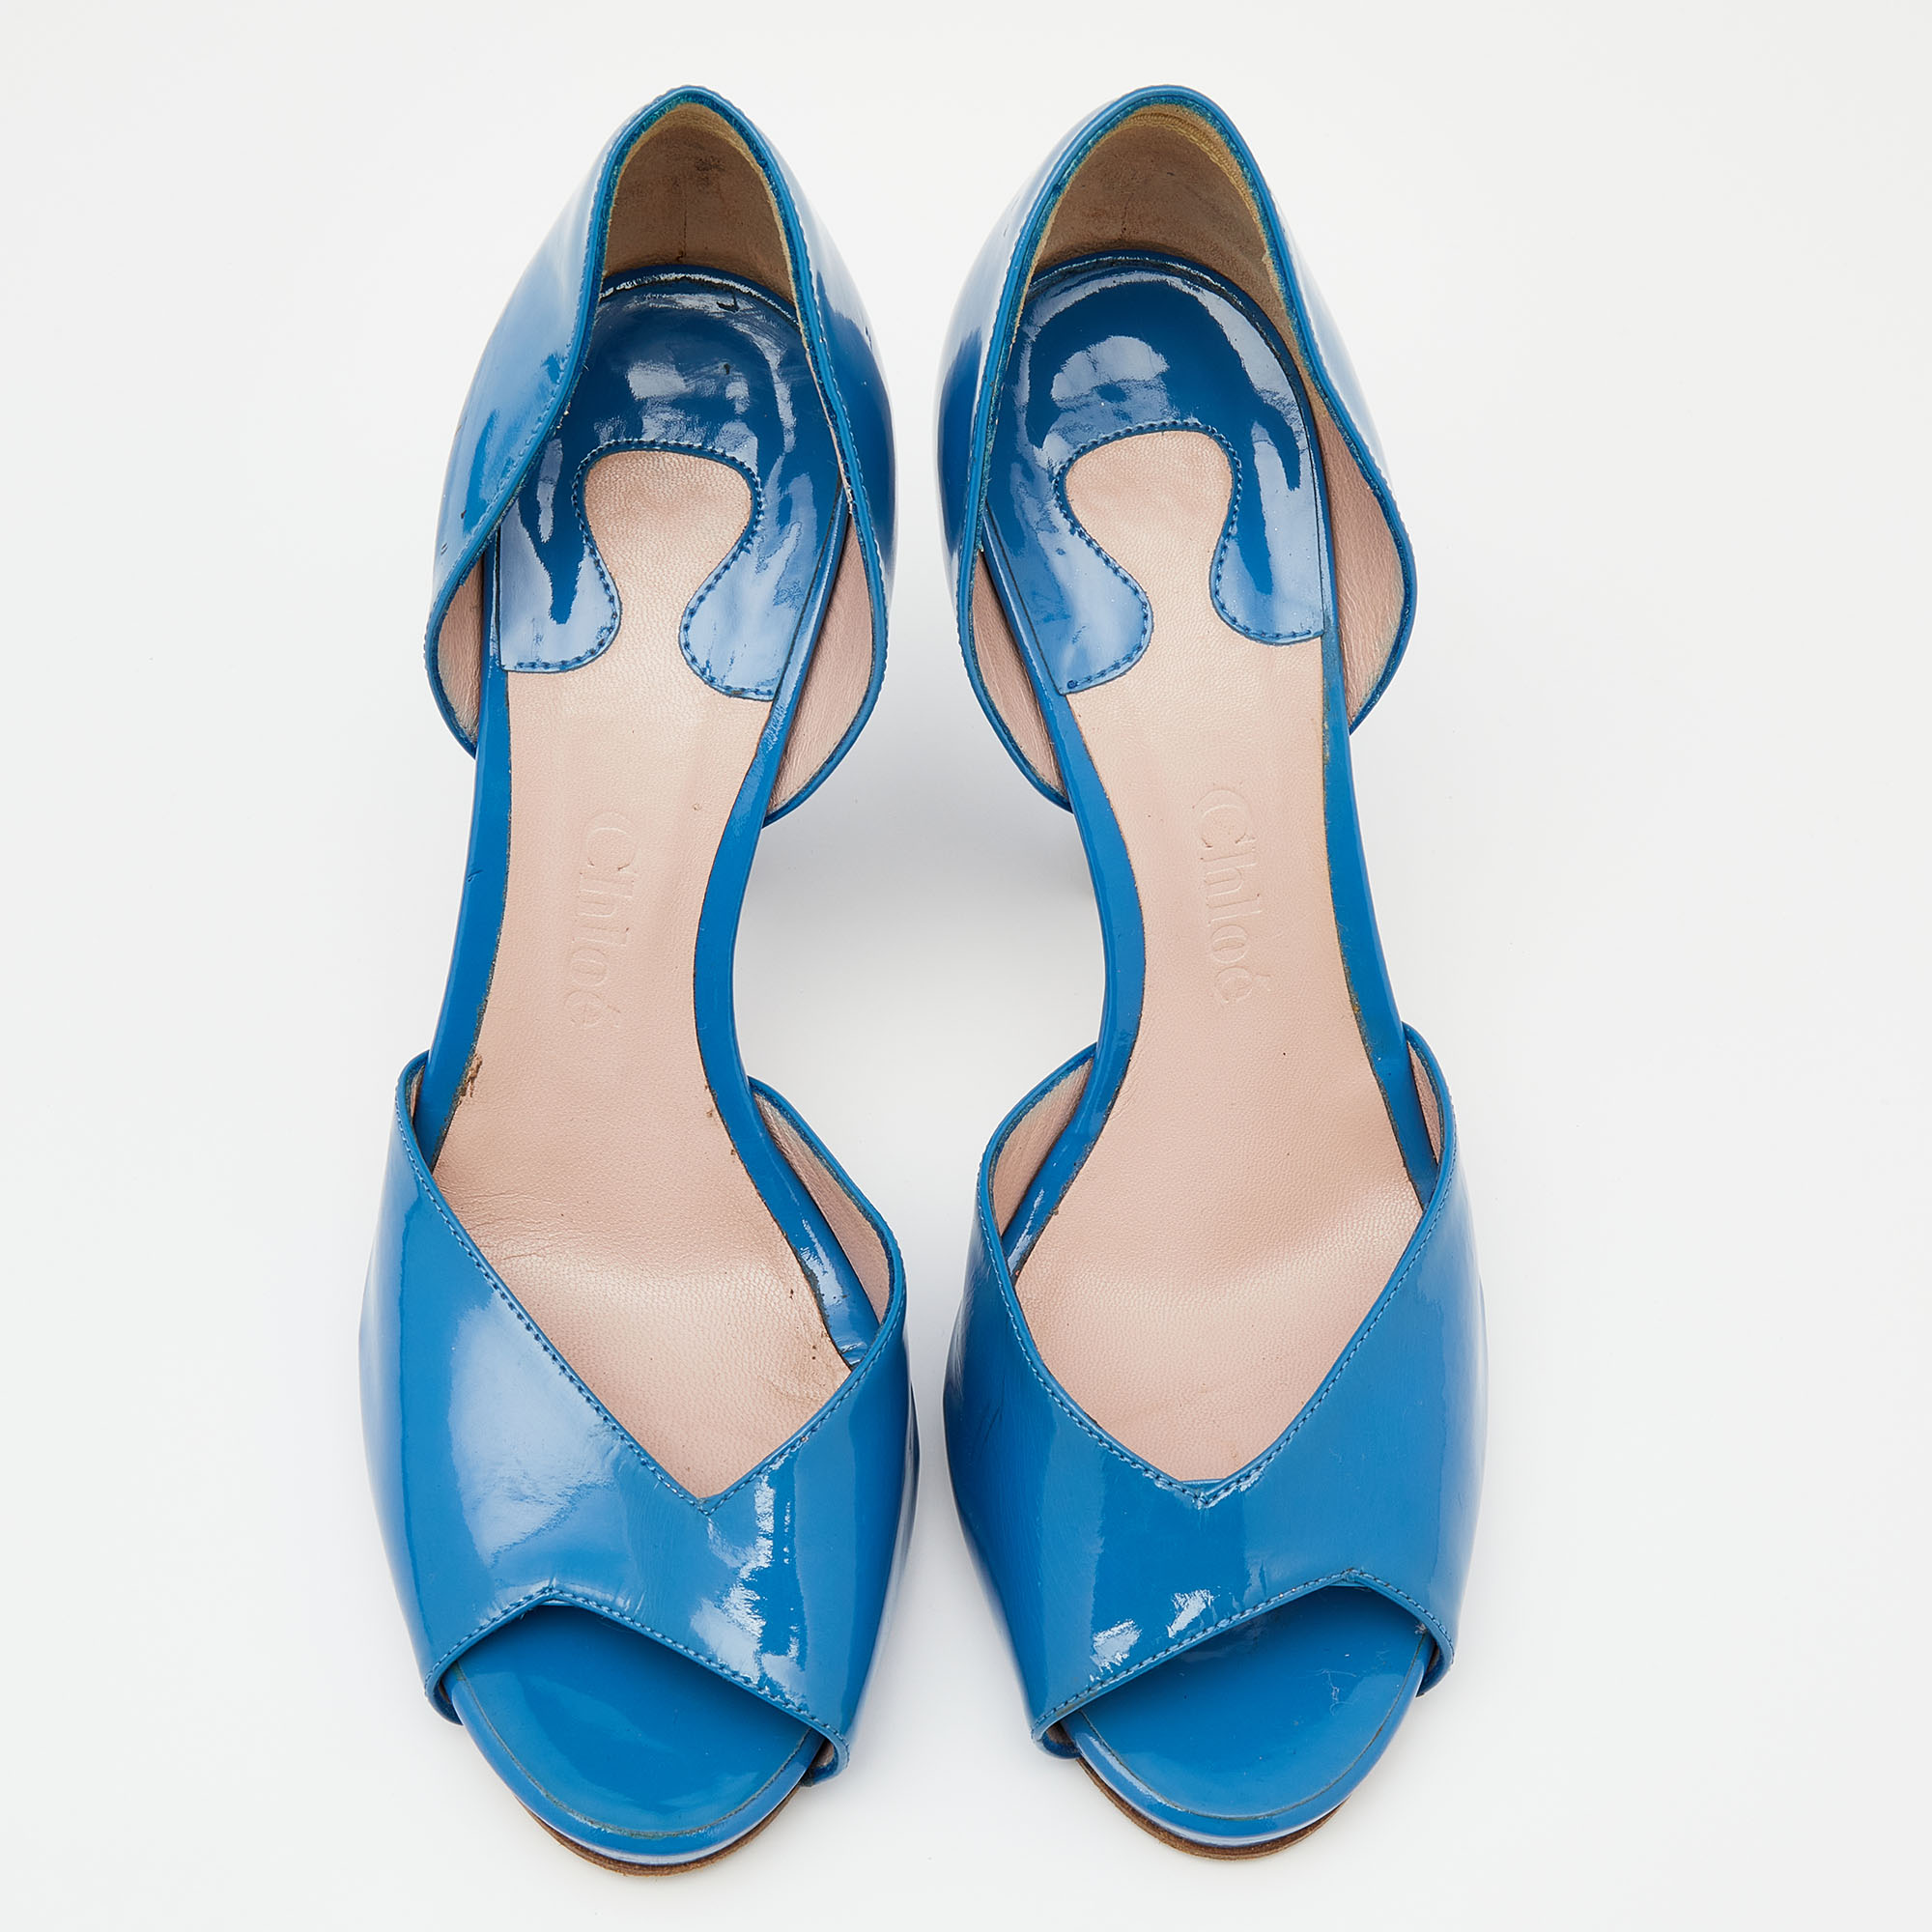 Chloe Blue Patent Leather Peep Toe D'orsay Pumps Size 36